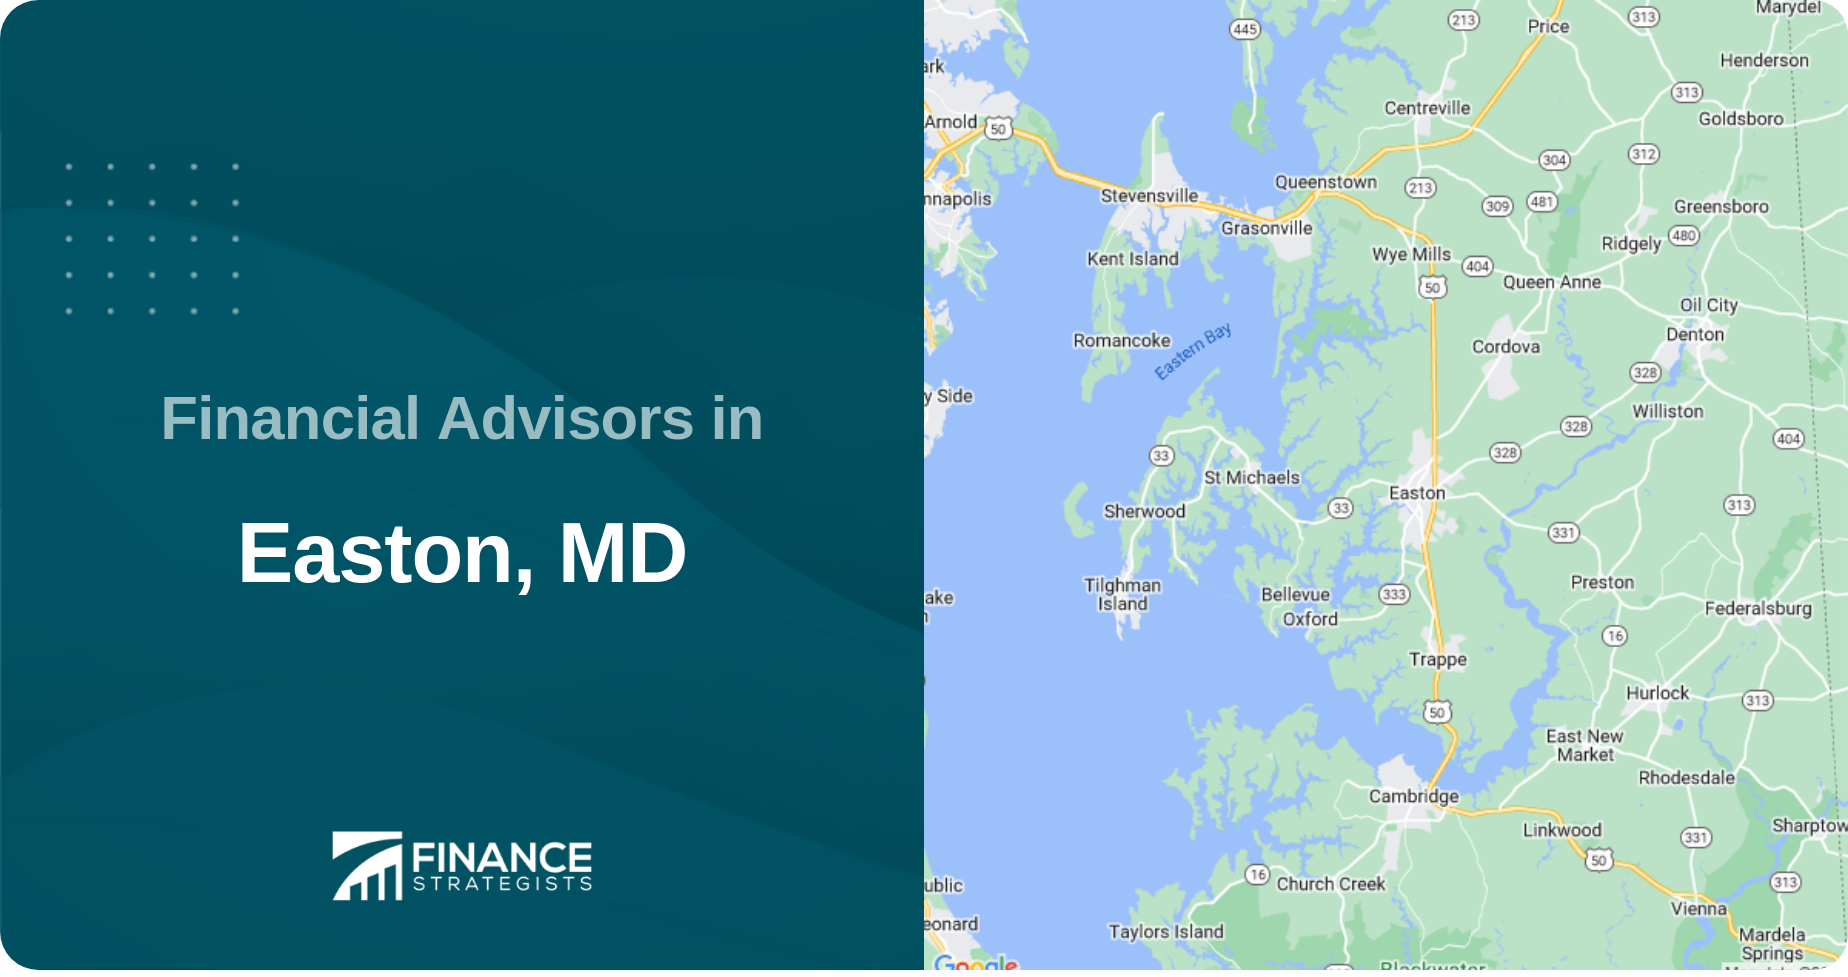 Financial Advisors in Easton, MD